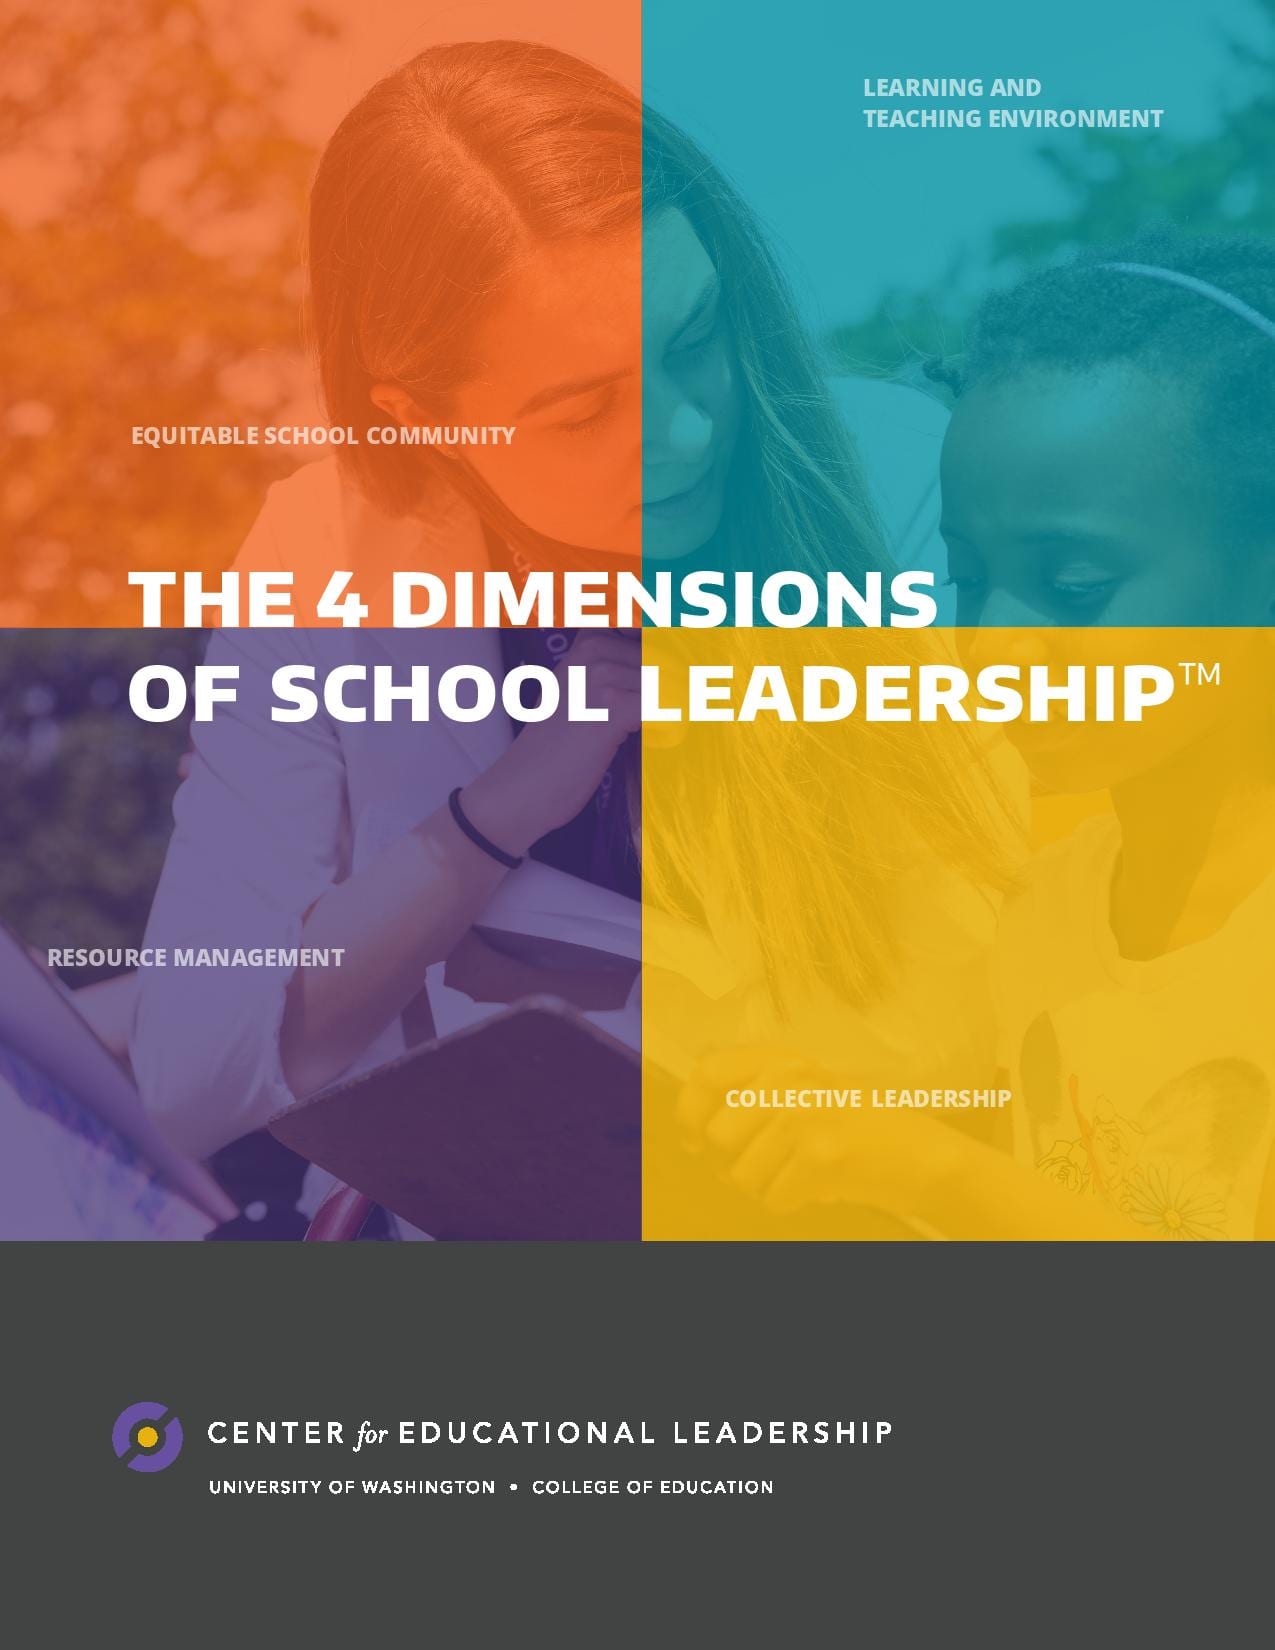 educational leadership articles 2020